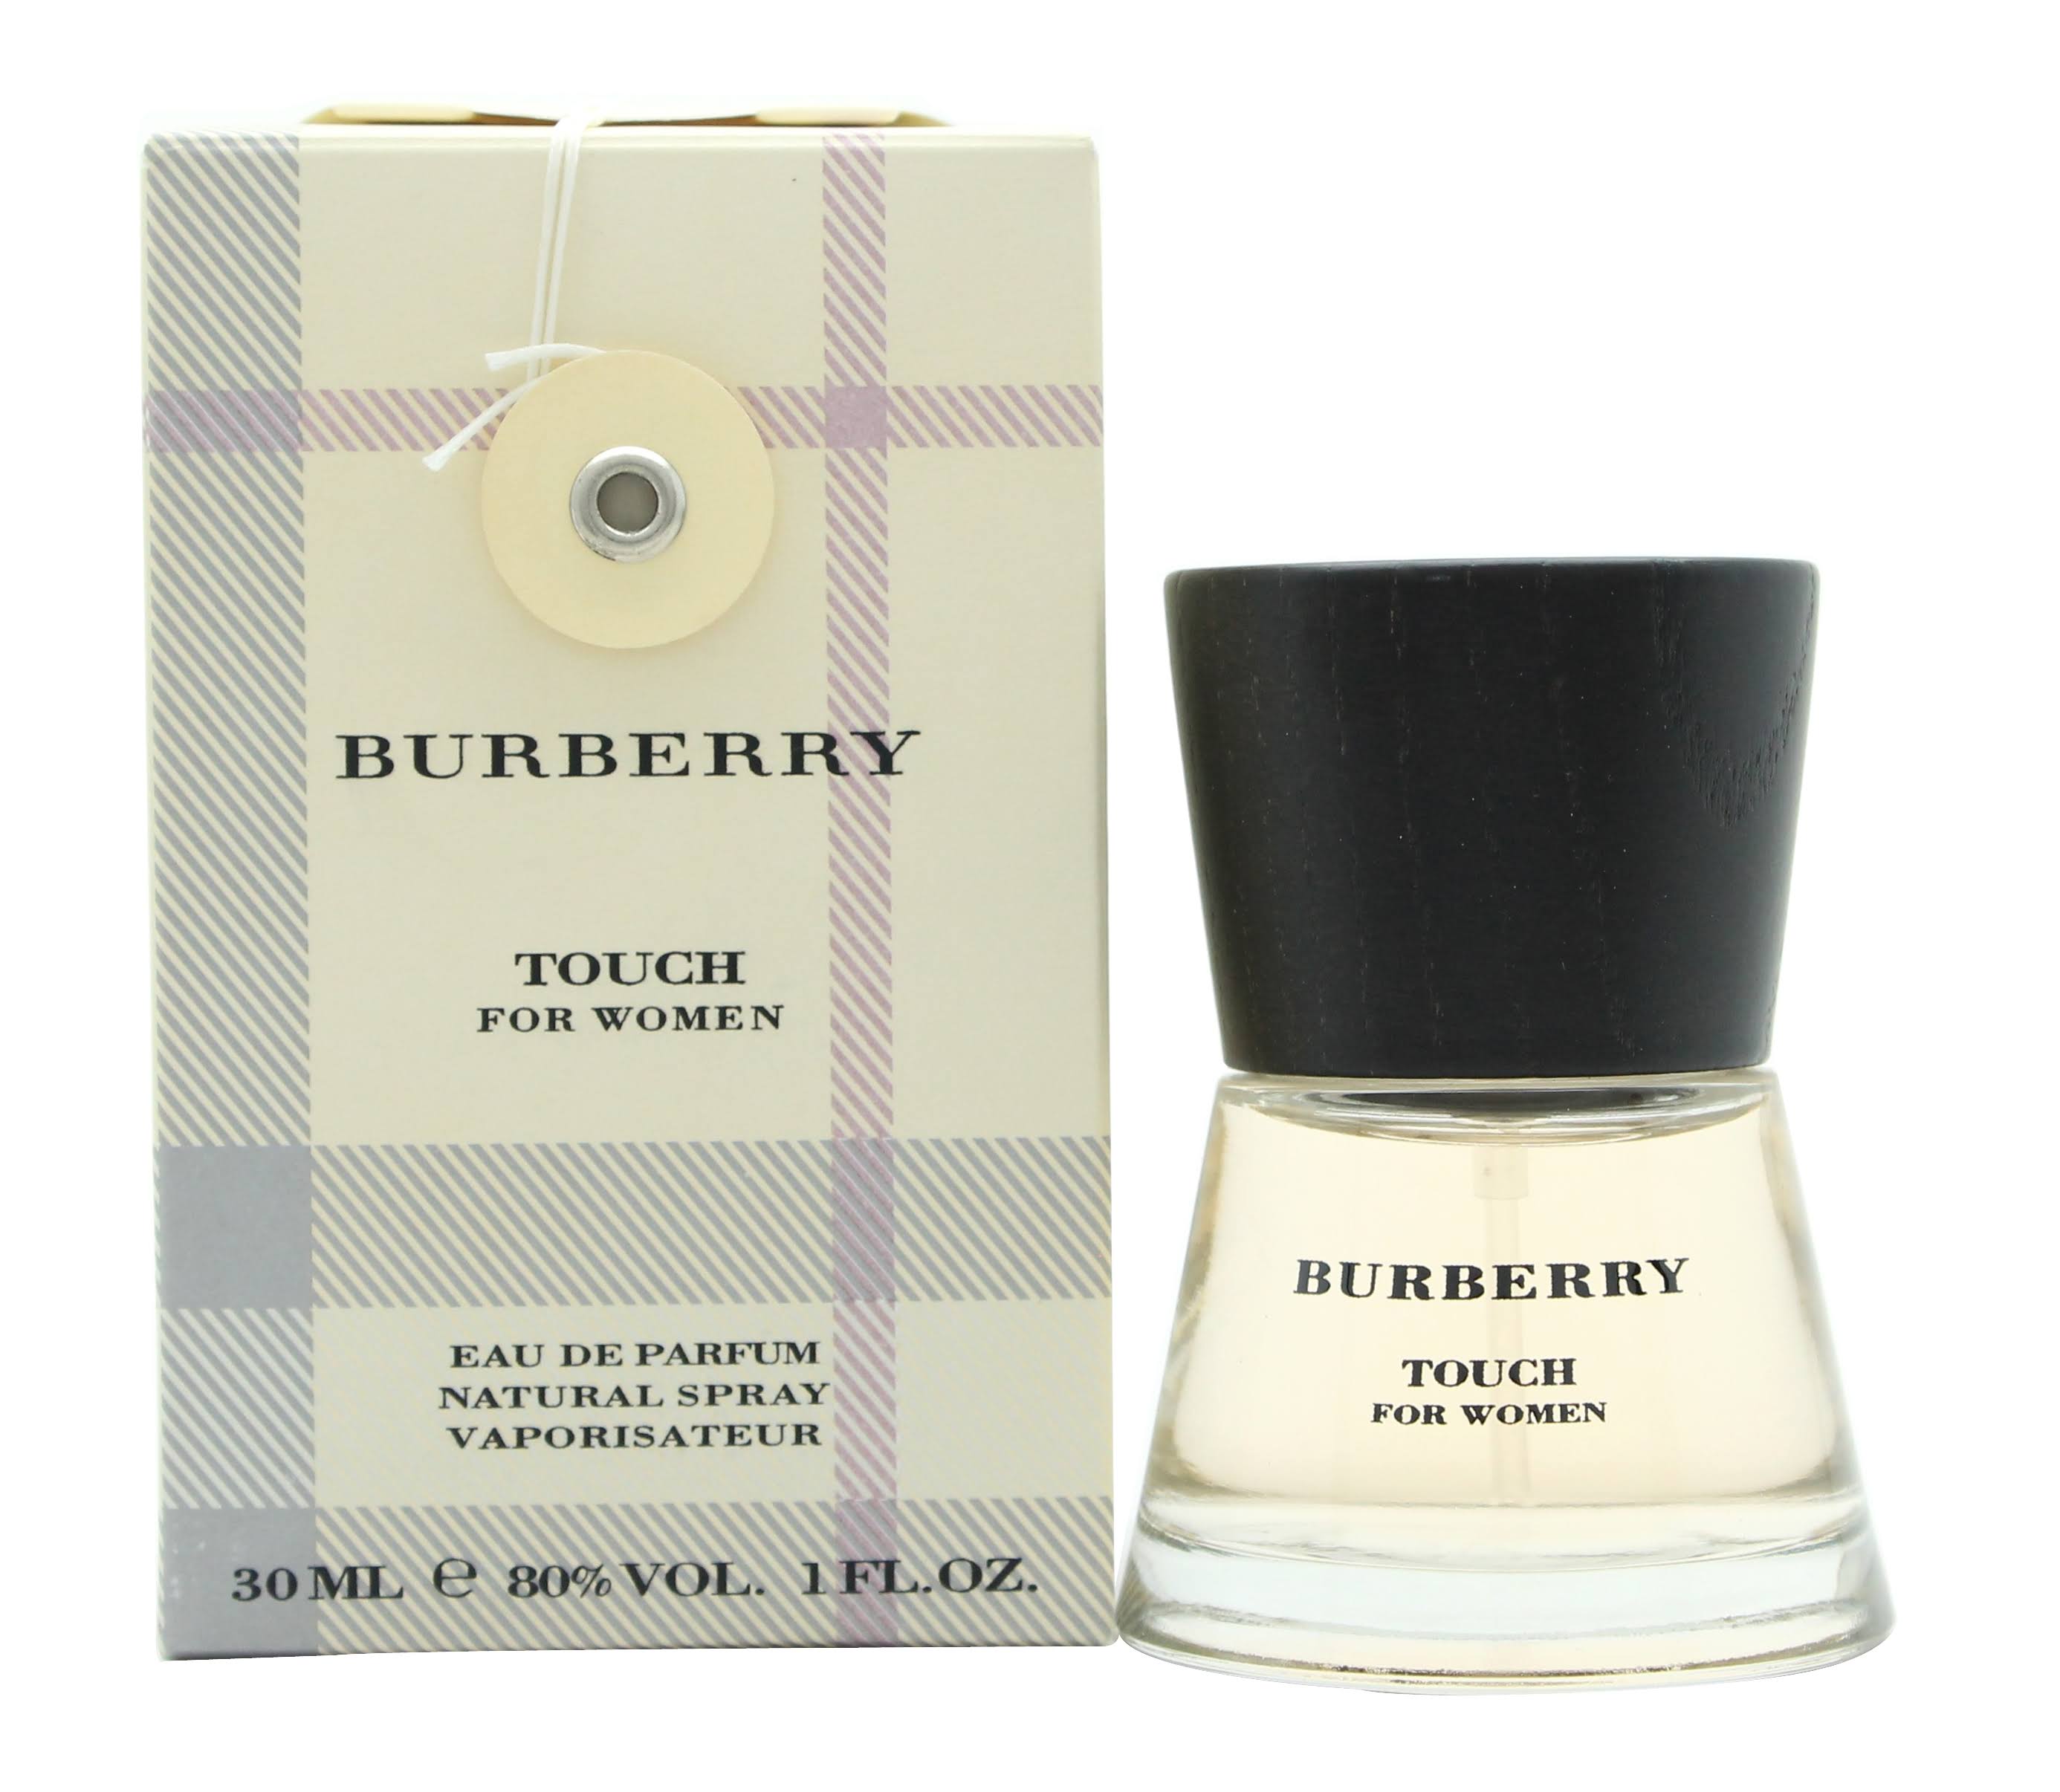 Burberry for Women Eau De Parfum Spray - Touch, 30ml